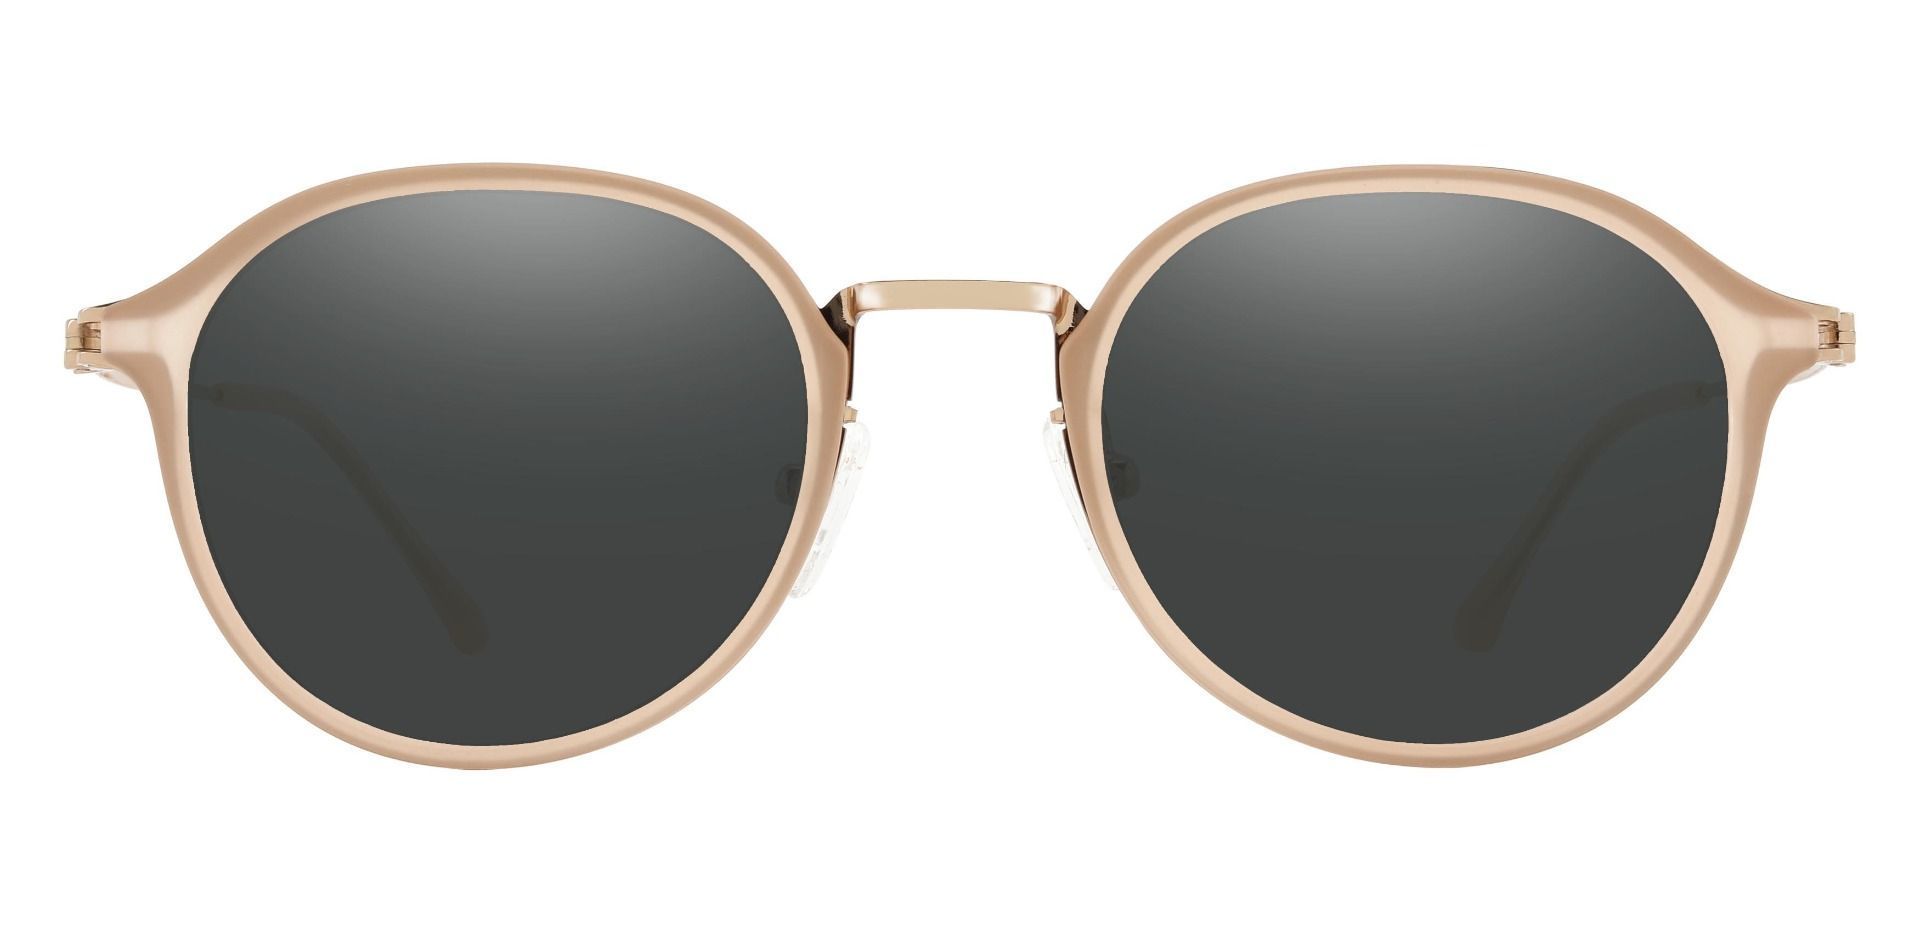 Billings Round Prescription Sunglasses - Brown Frame With Gray Lenses